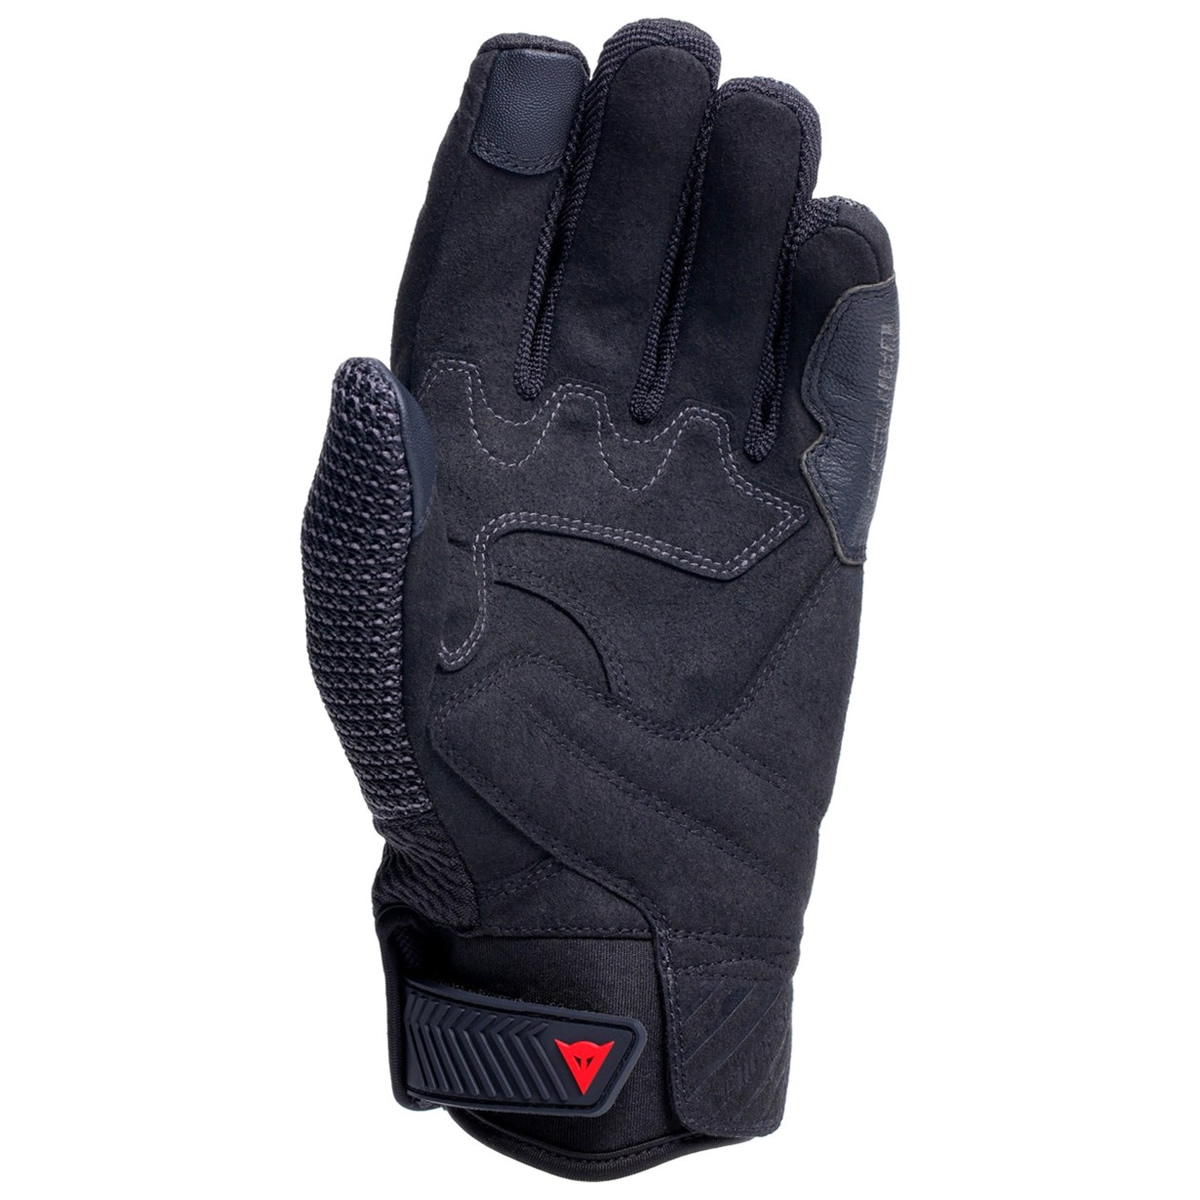 Dainese Handschuhe Torino, schwarz-anthrazit